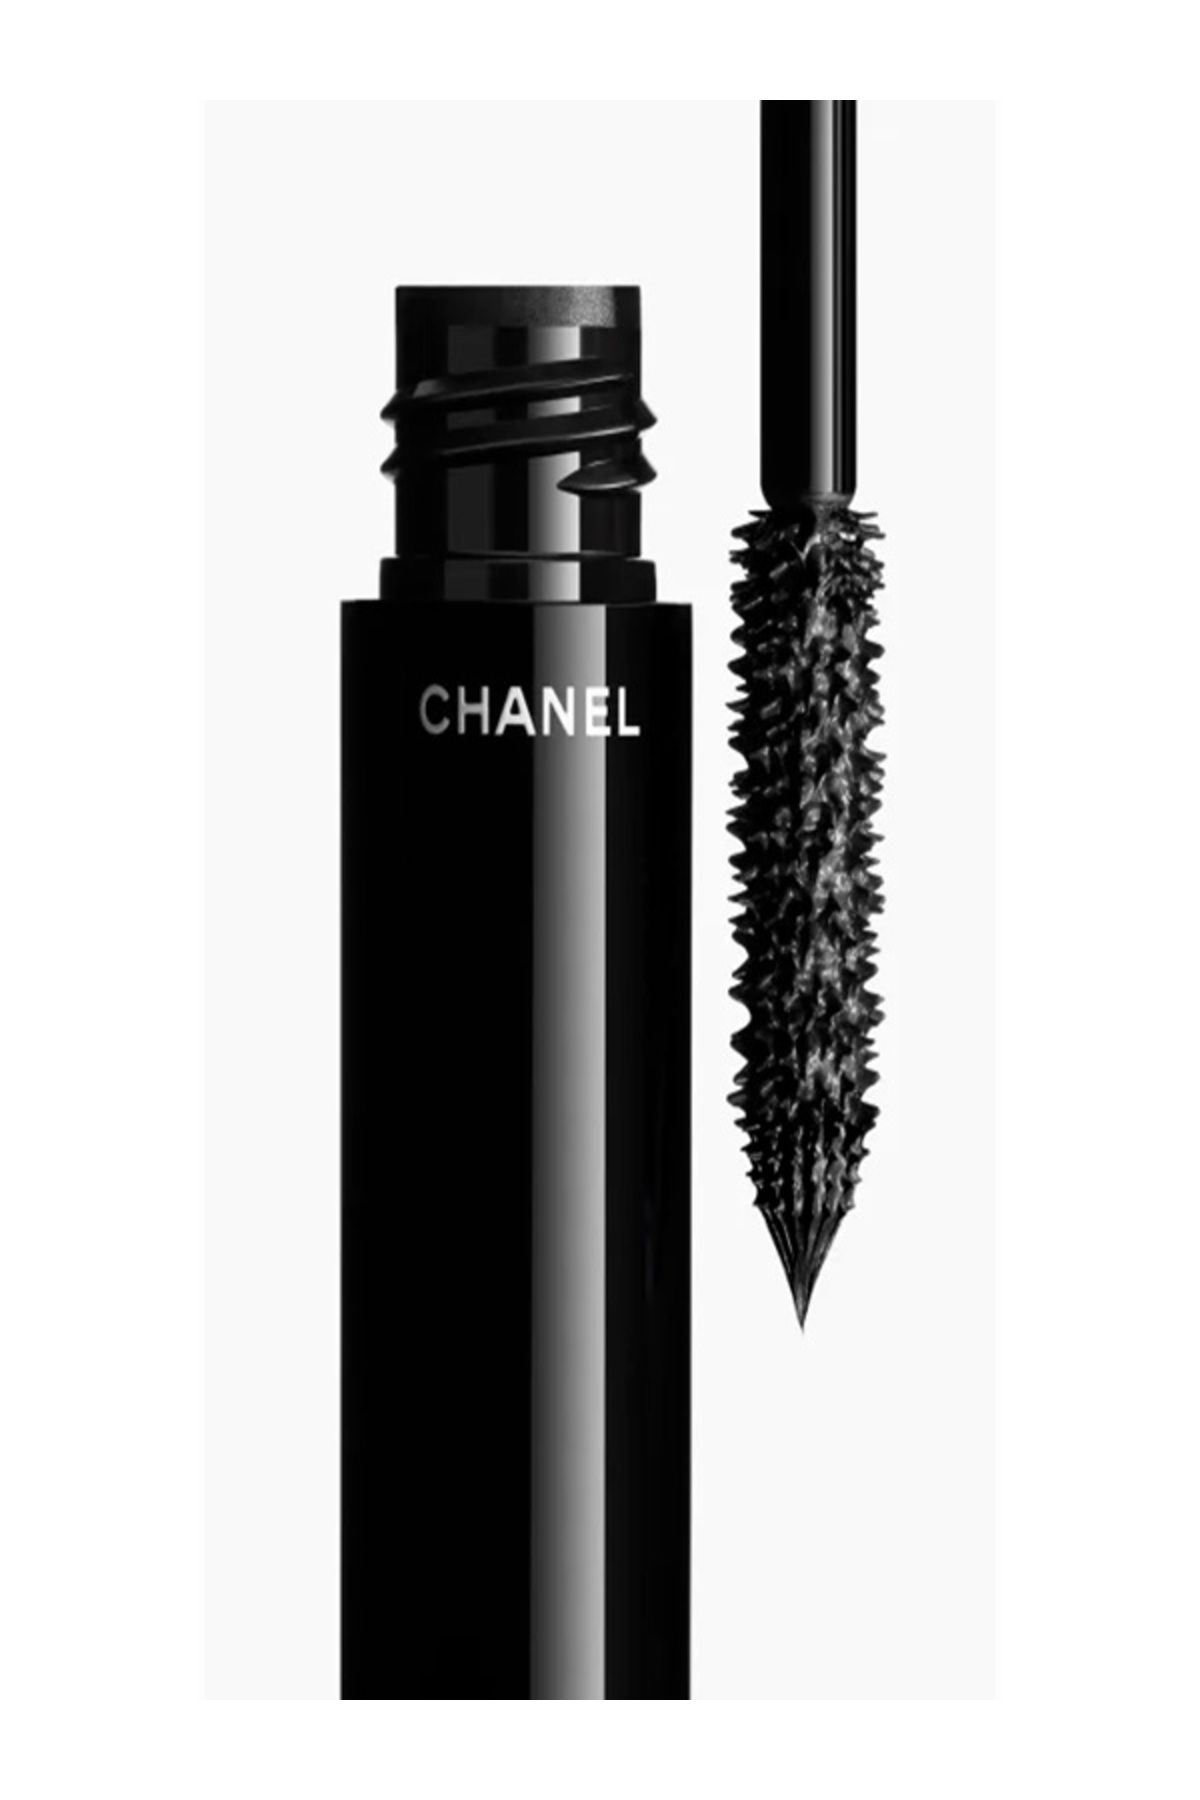 Chanel ریمل ضد آب حجم دهنده LE VOLUME DE با رنگدانه شدید حاوی ویتامین B5 رنگ مشکی